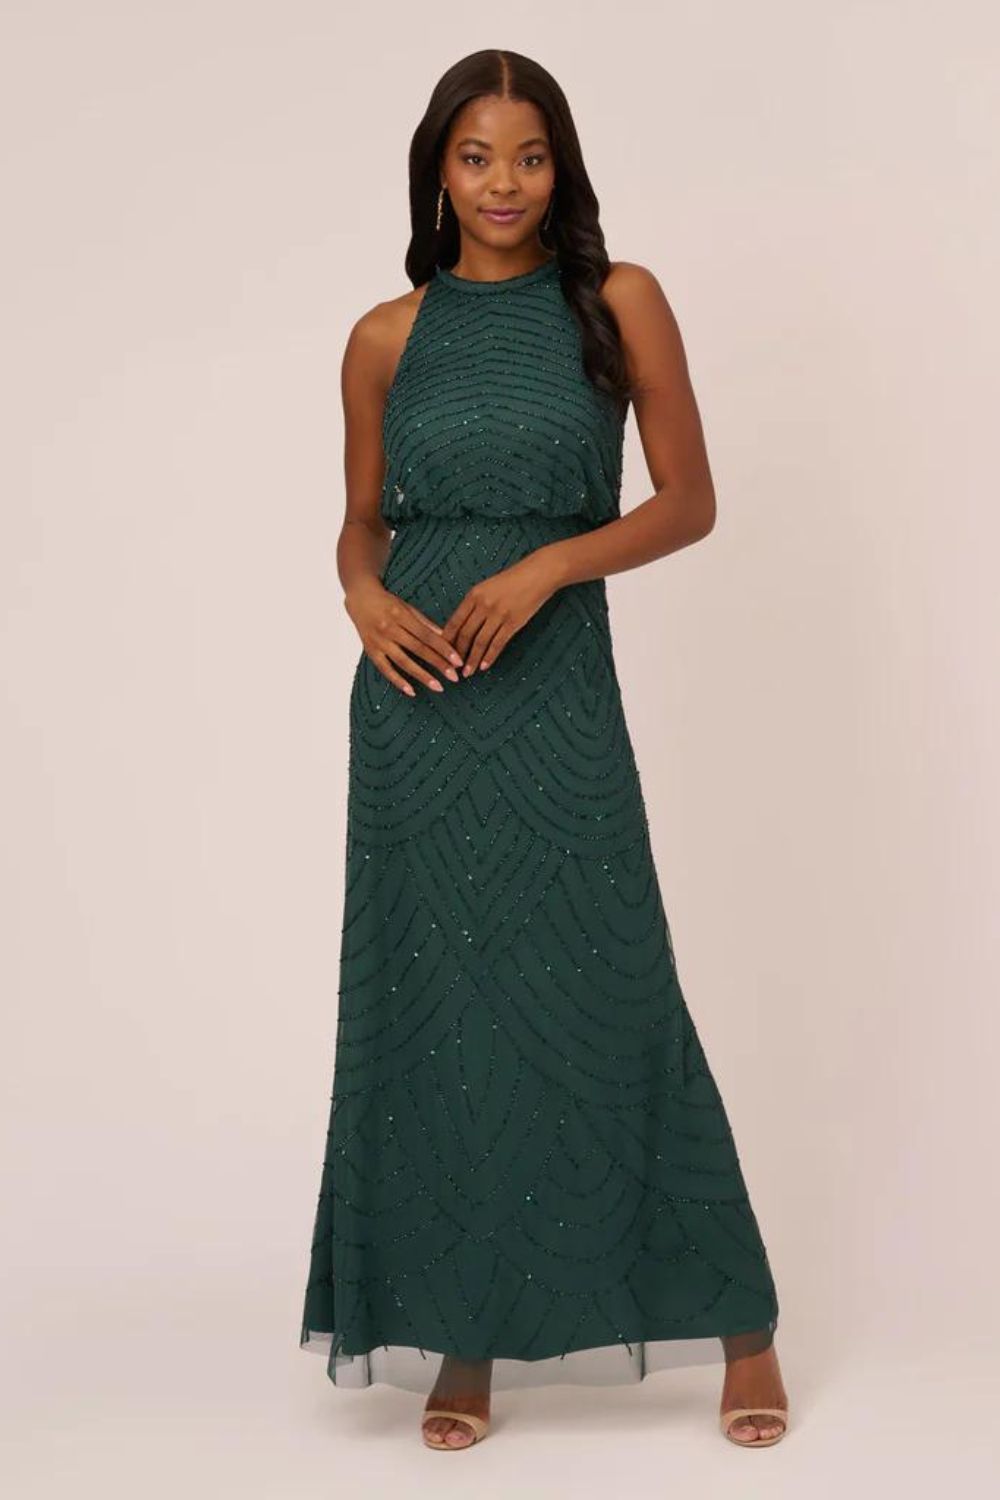 Amazon.com: Art Deco Dress